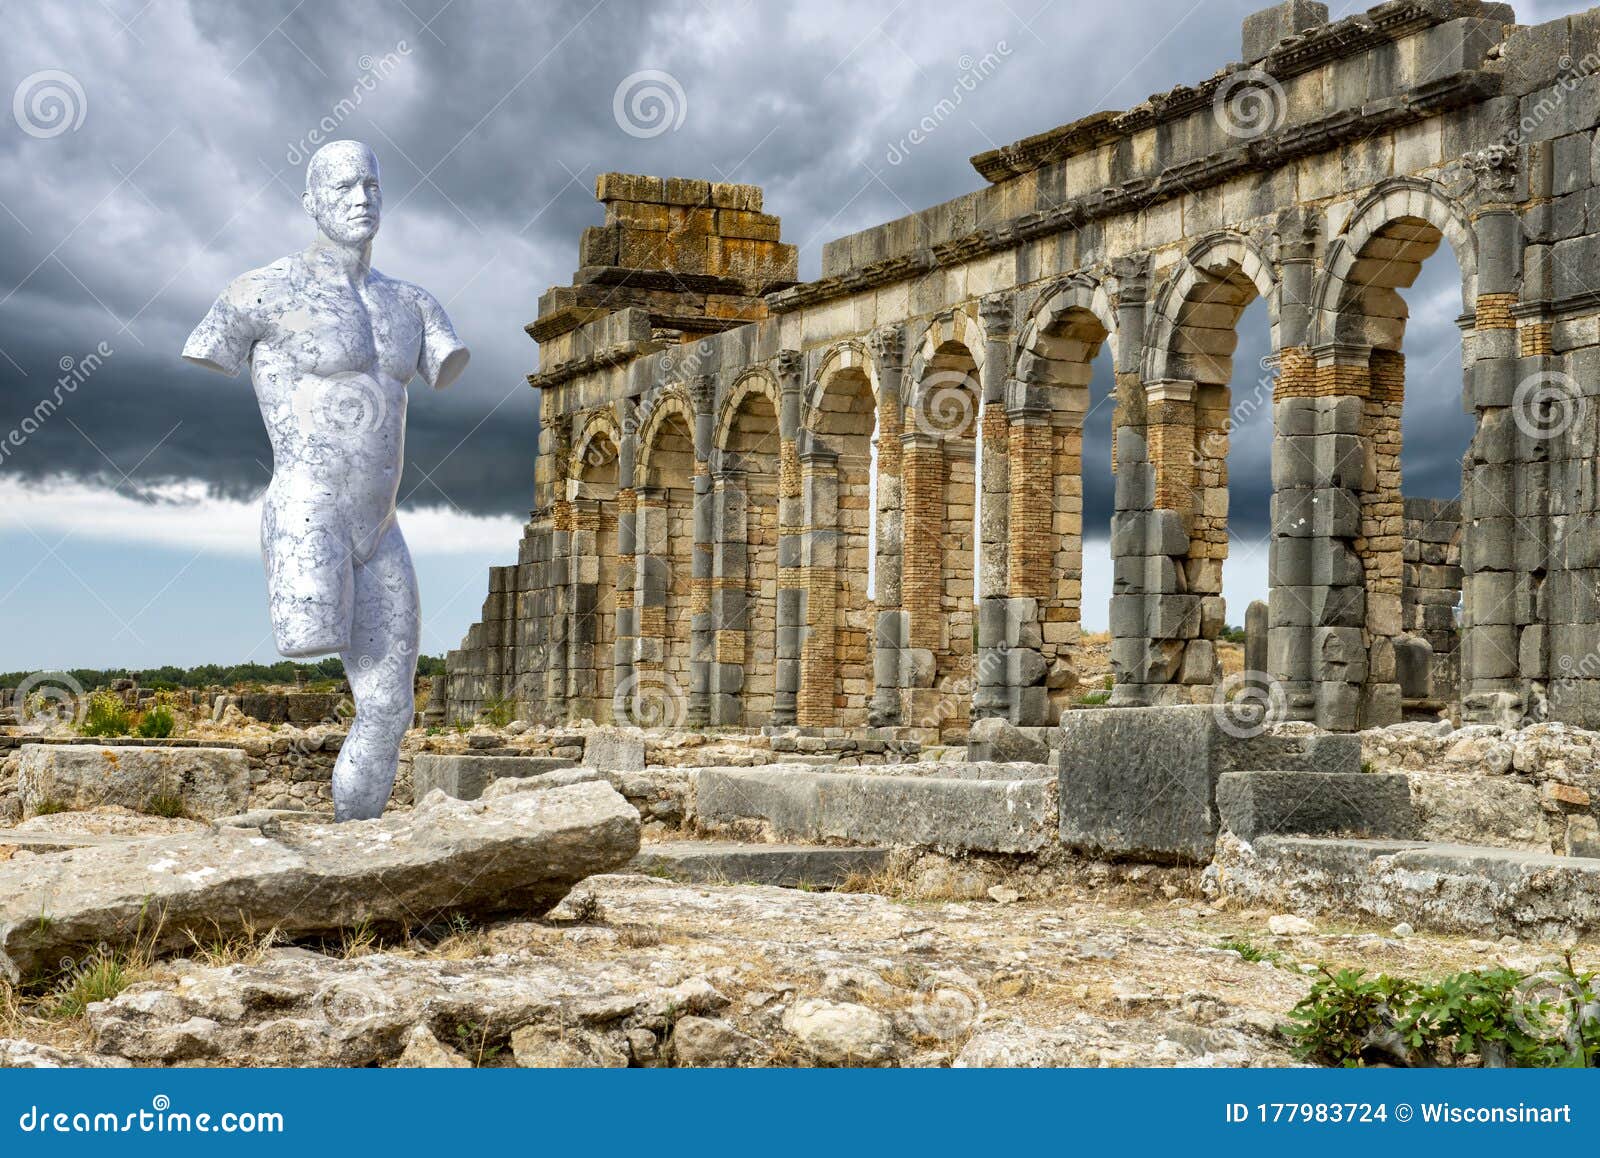 ancient roman city ruins, statue